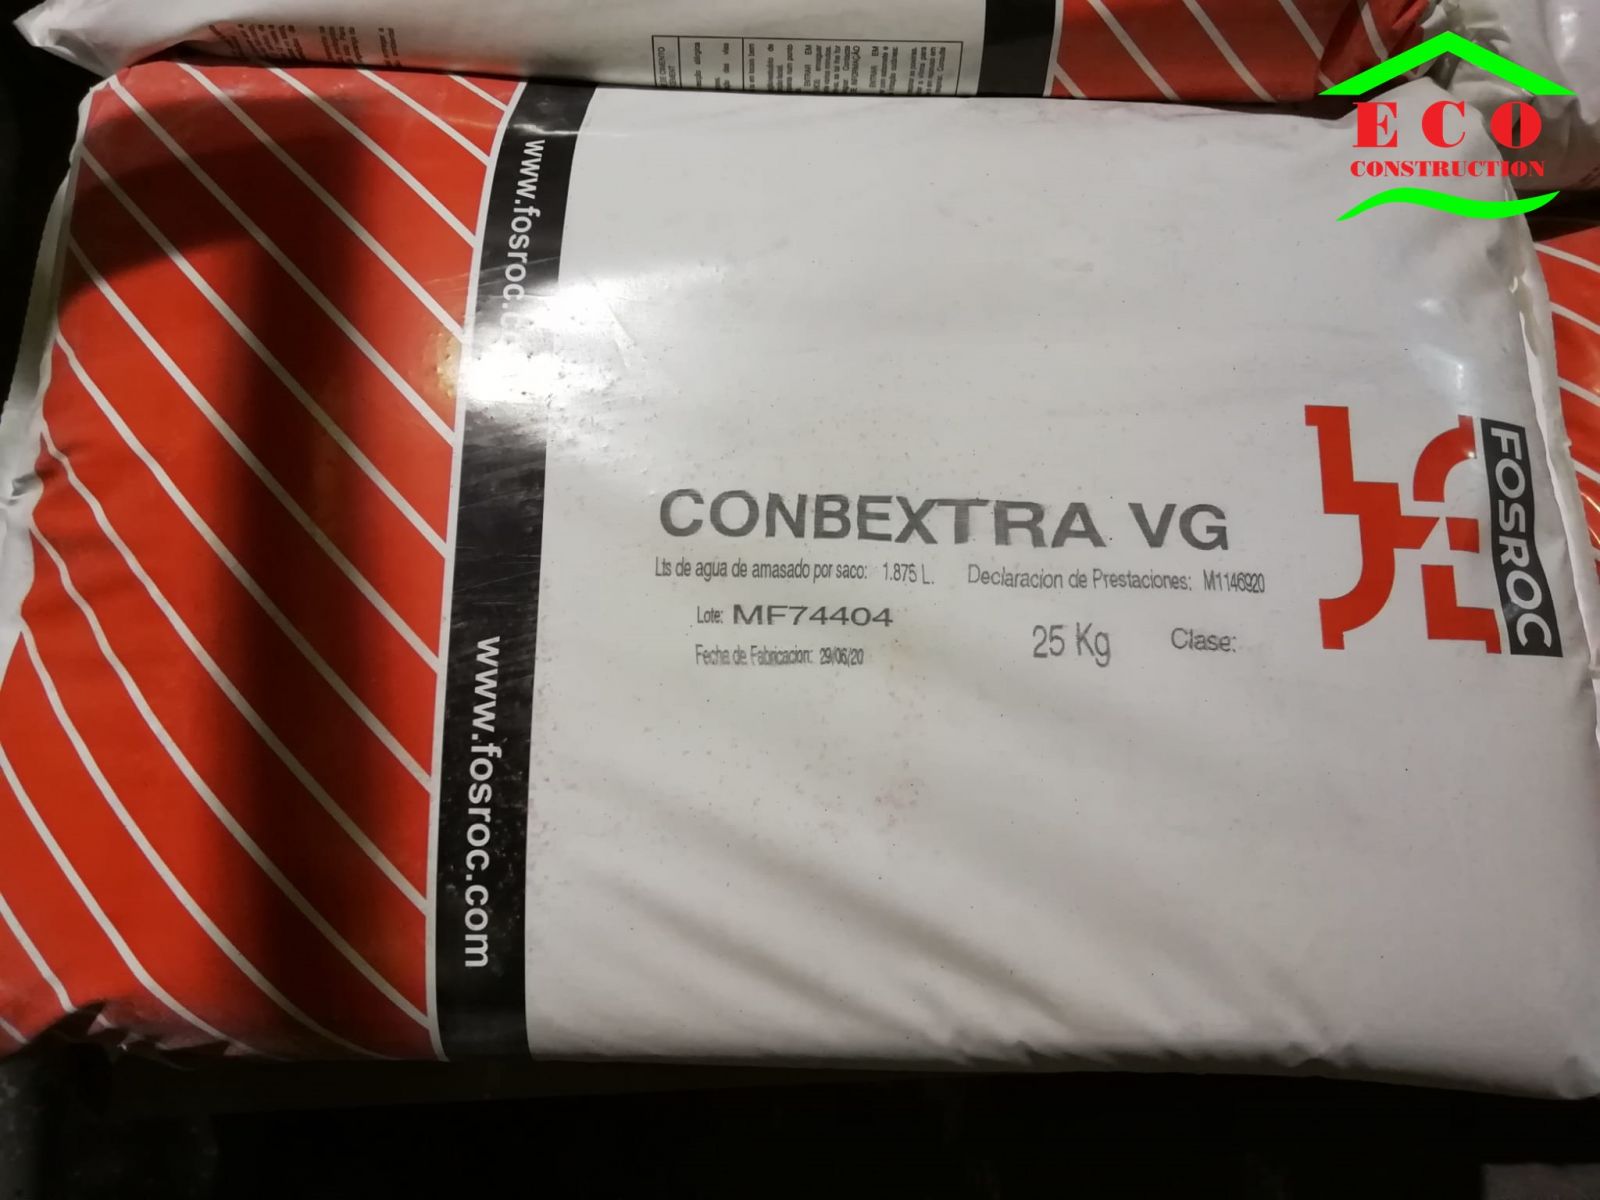 Conbextra VG